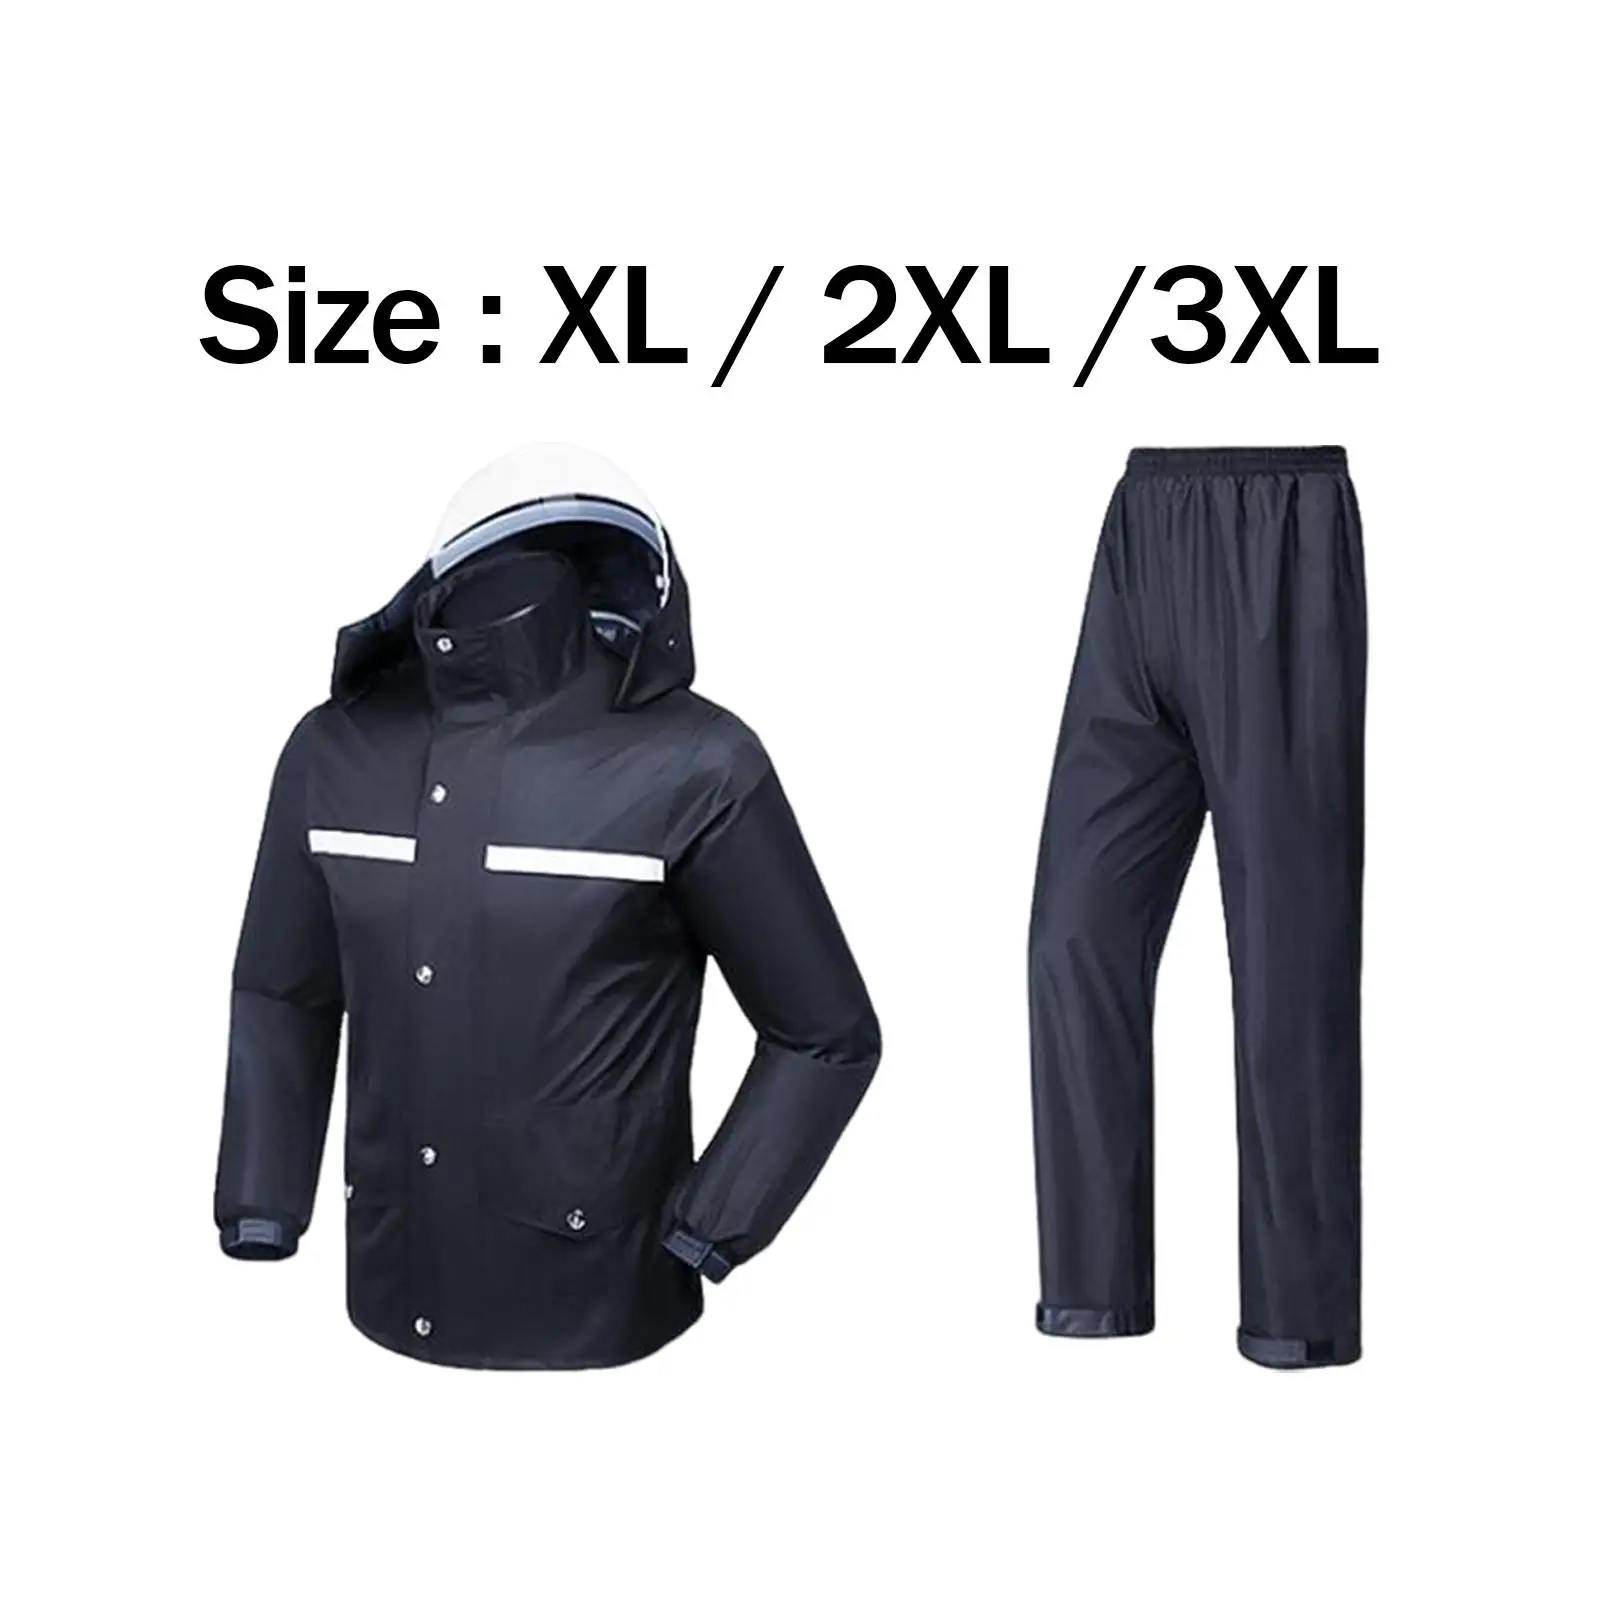 Motorcycle Raincoat with Jacket and Pants Elastic Rainwear for Men and Women